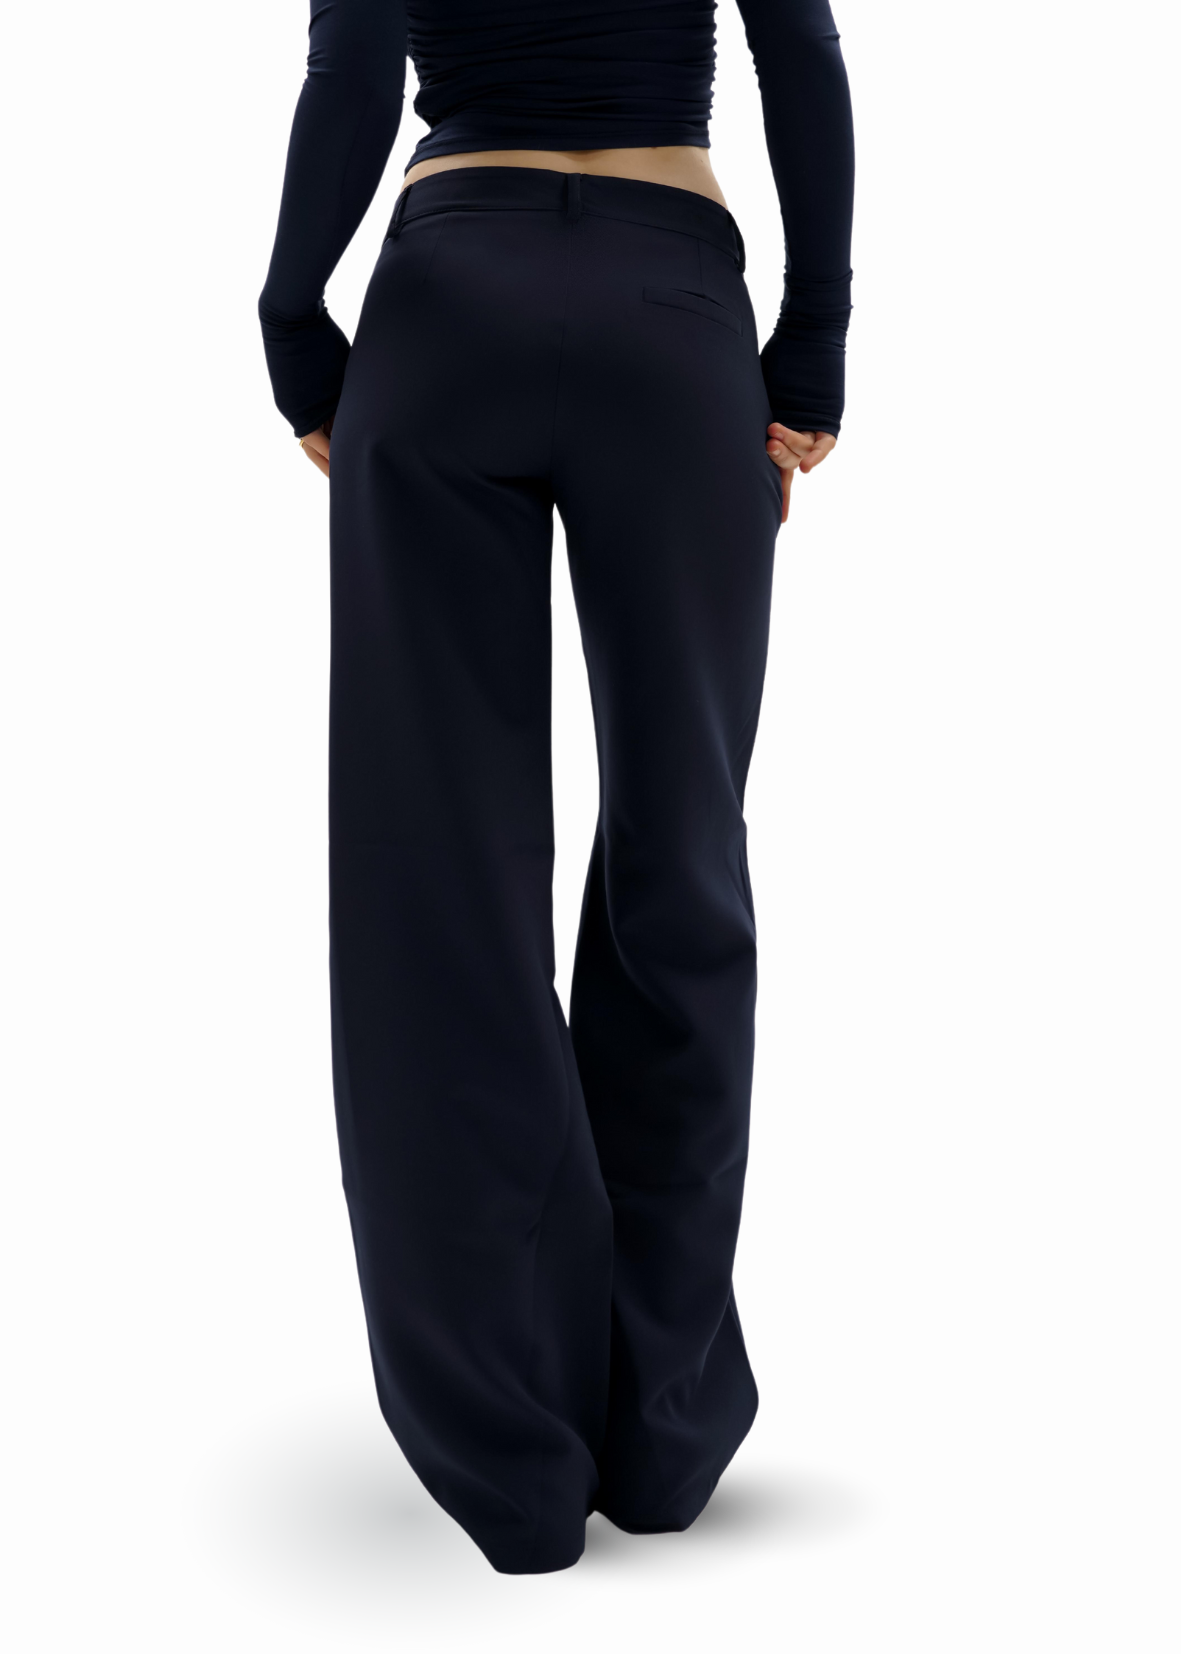 Pantalon droit taille basse/mi-longue casual bleu nuit (REGULAR)